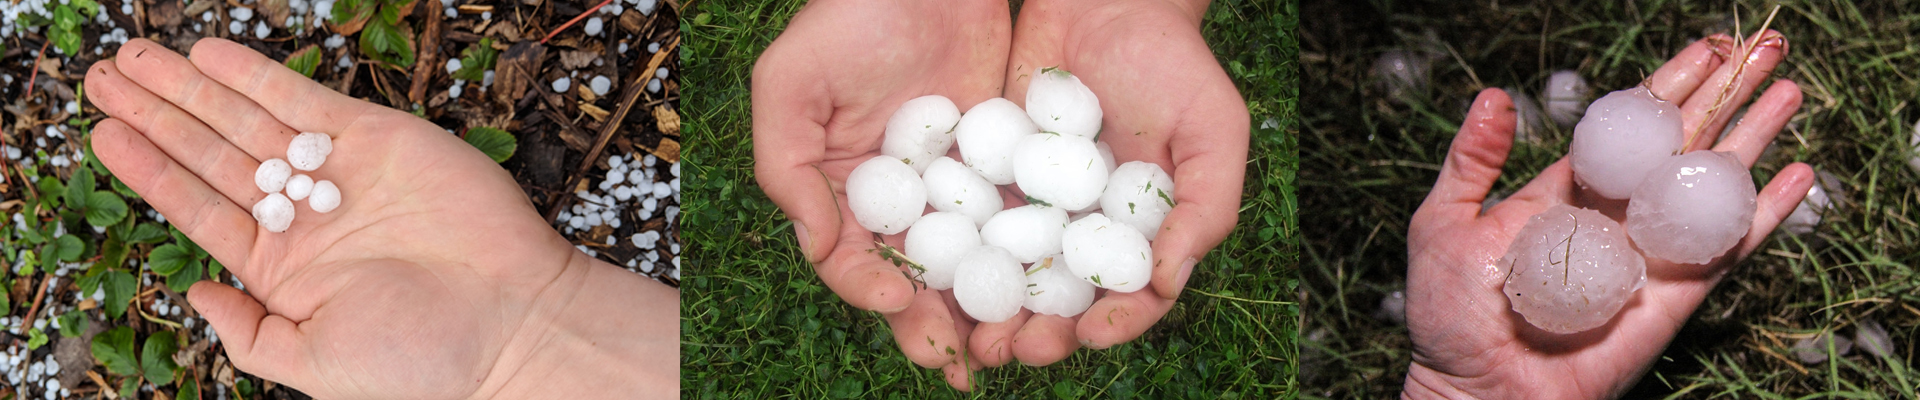 small, medium, large hail in hand